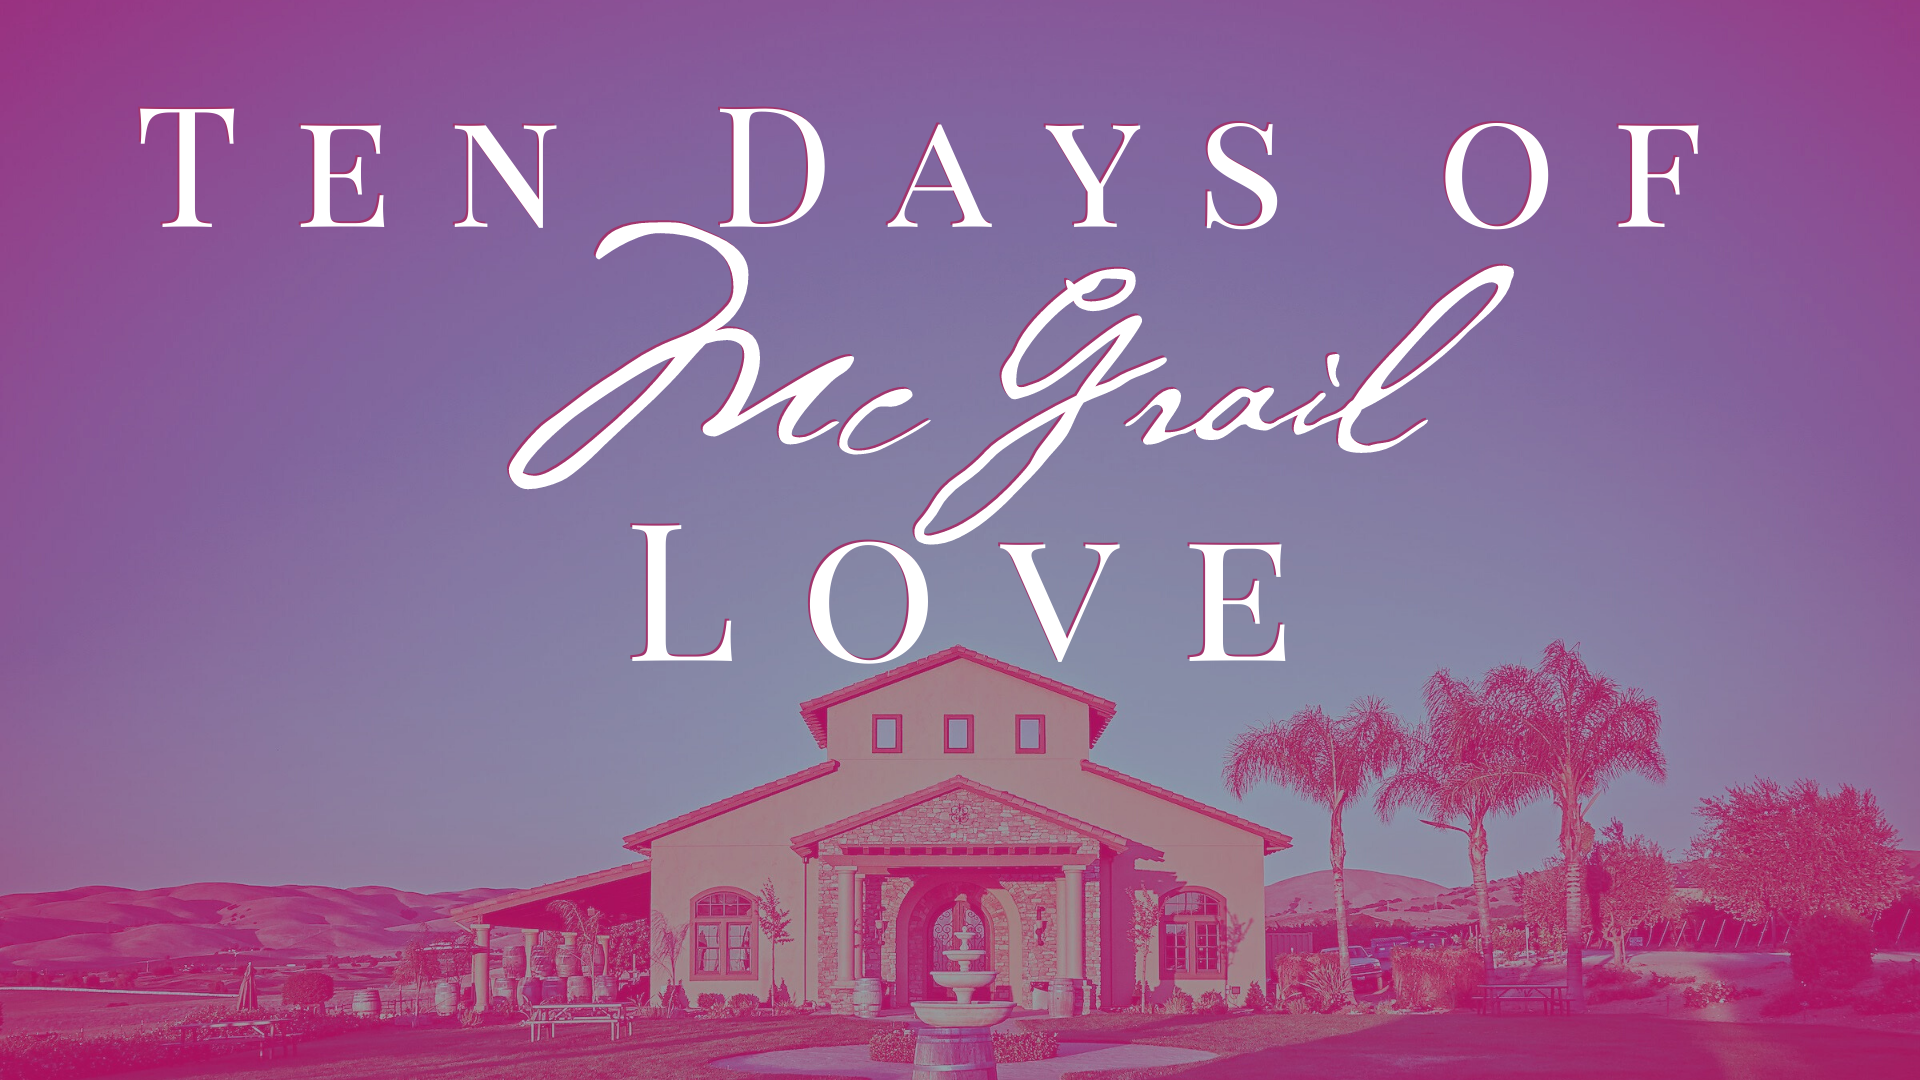 Ten Days of McGrail Love